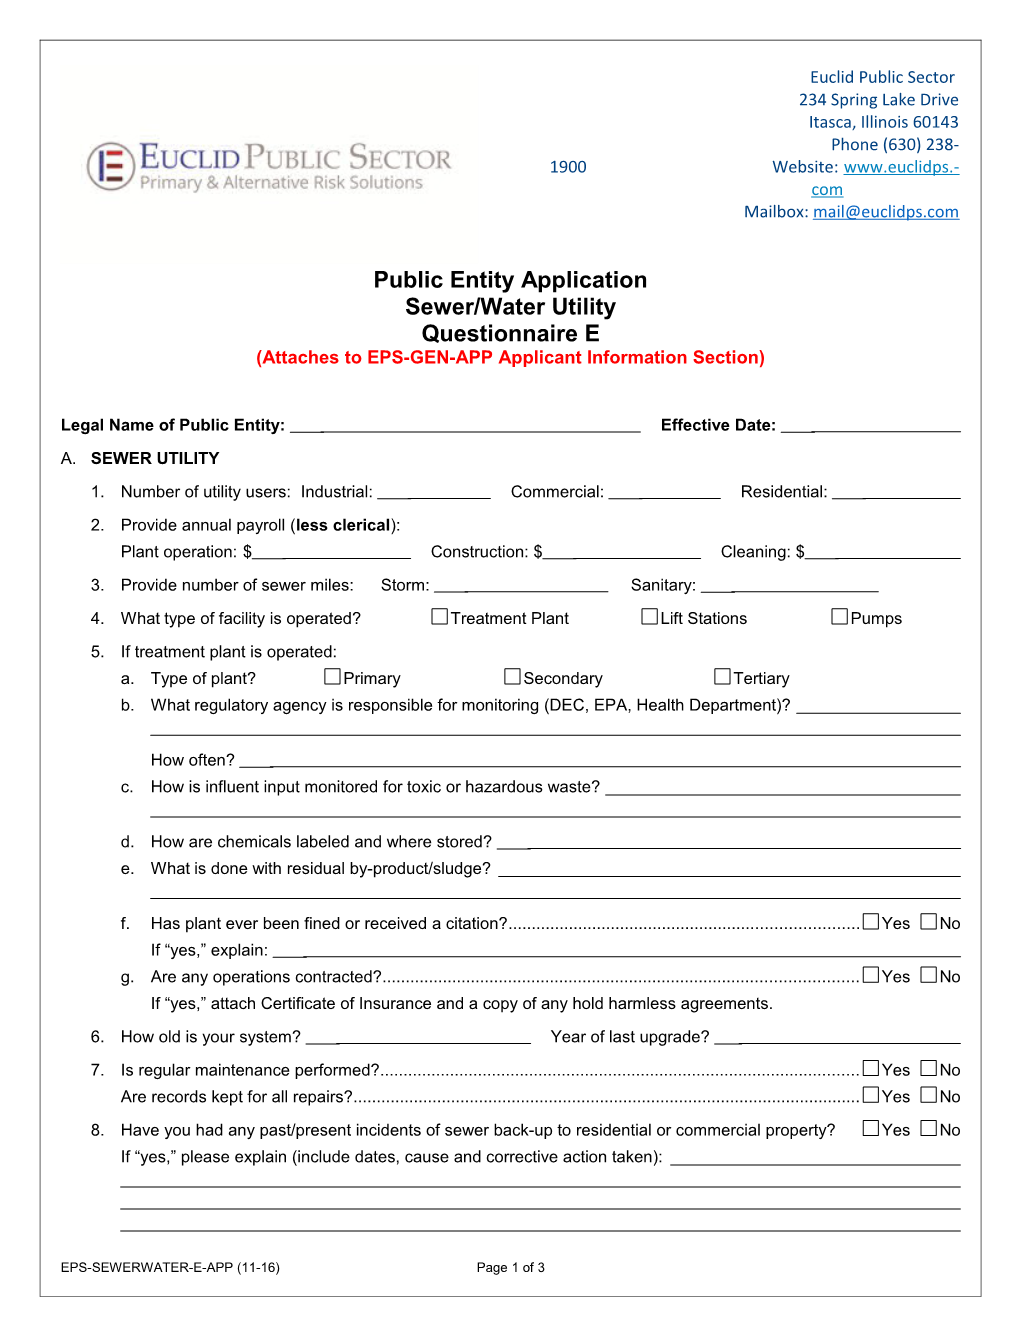 Public Entity Application Sewer/Water Utility Questionnaire E